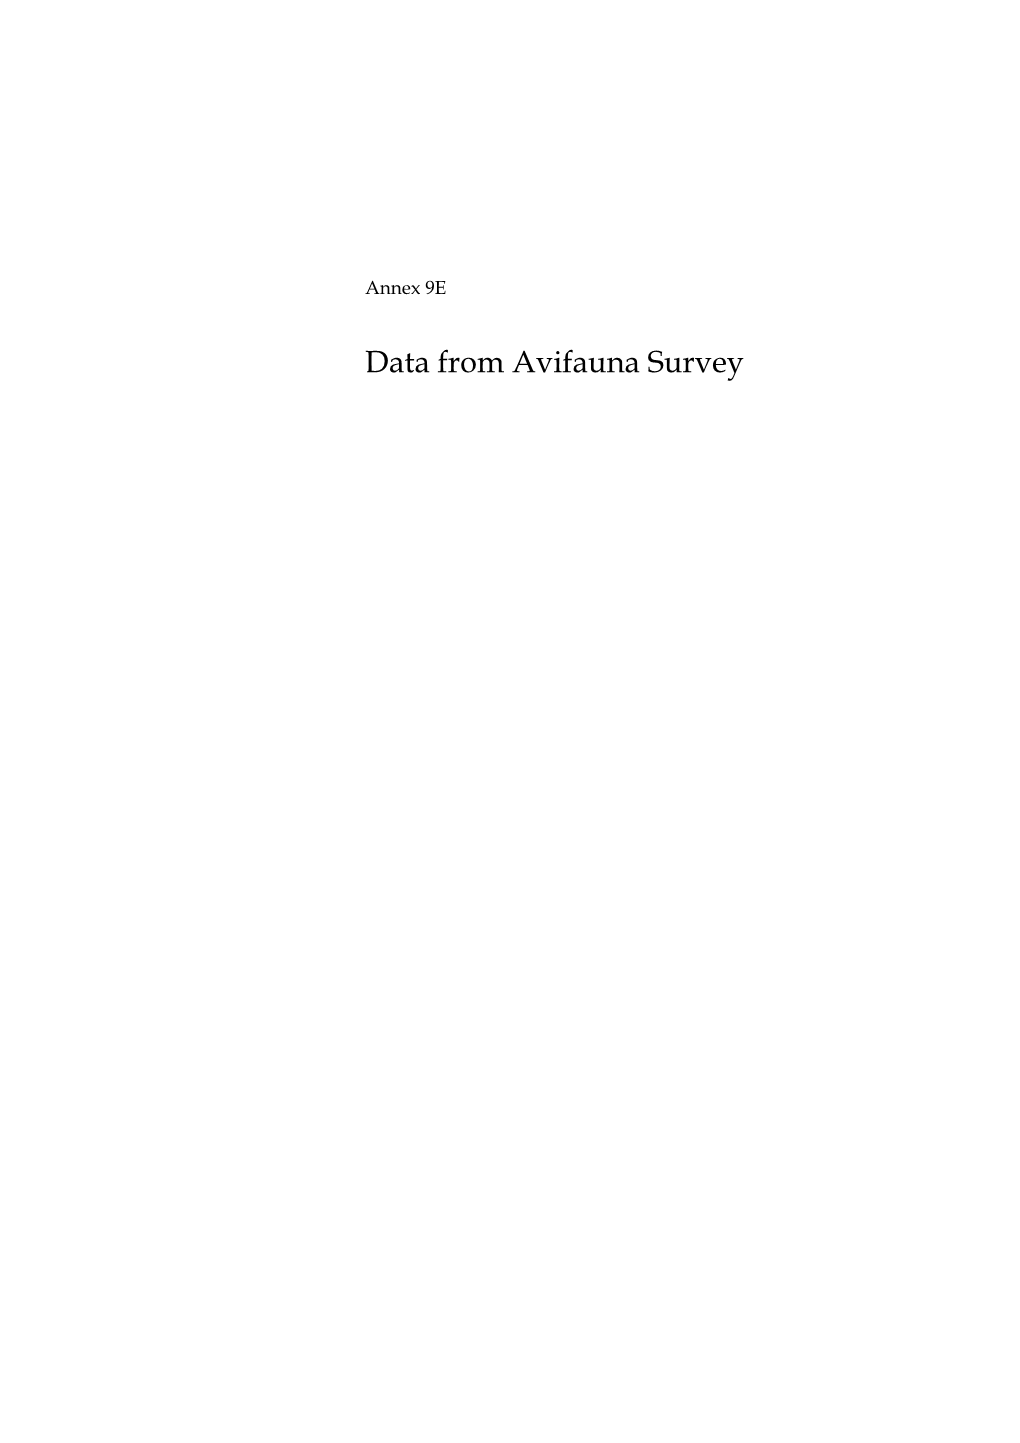 Data from Avifauna Survey